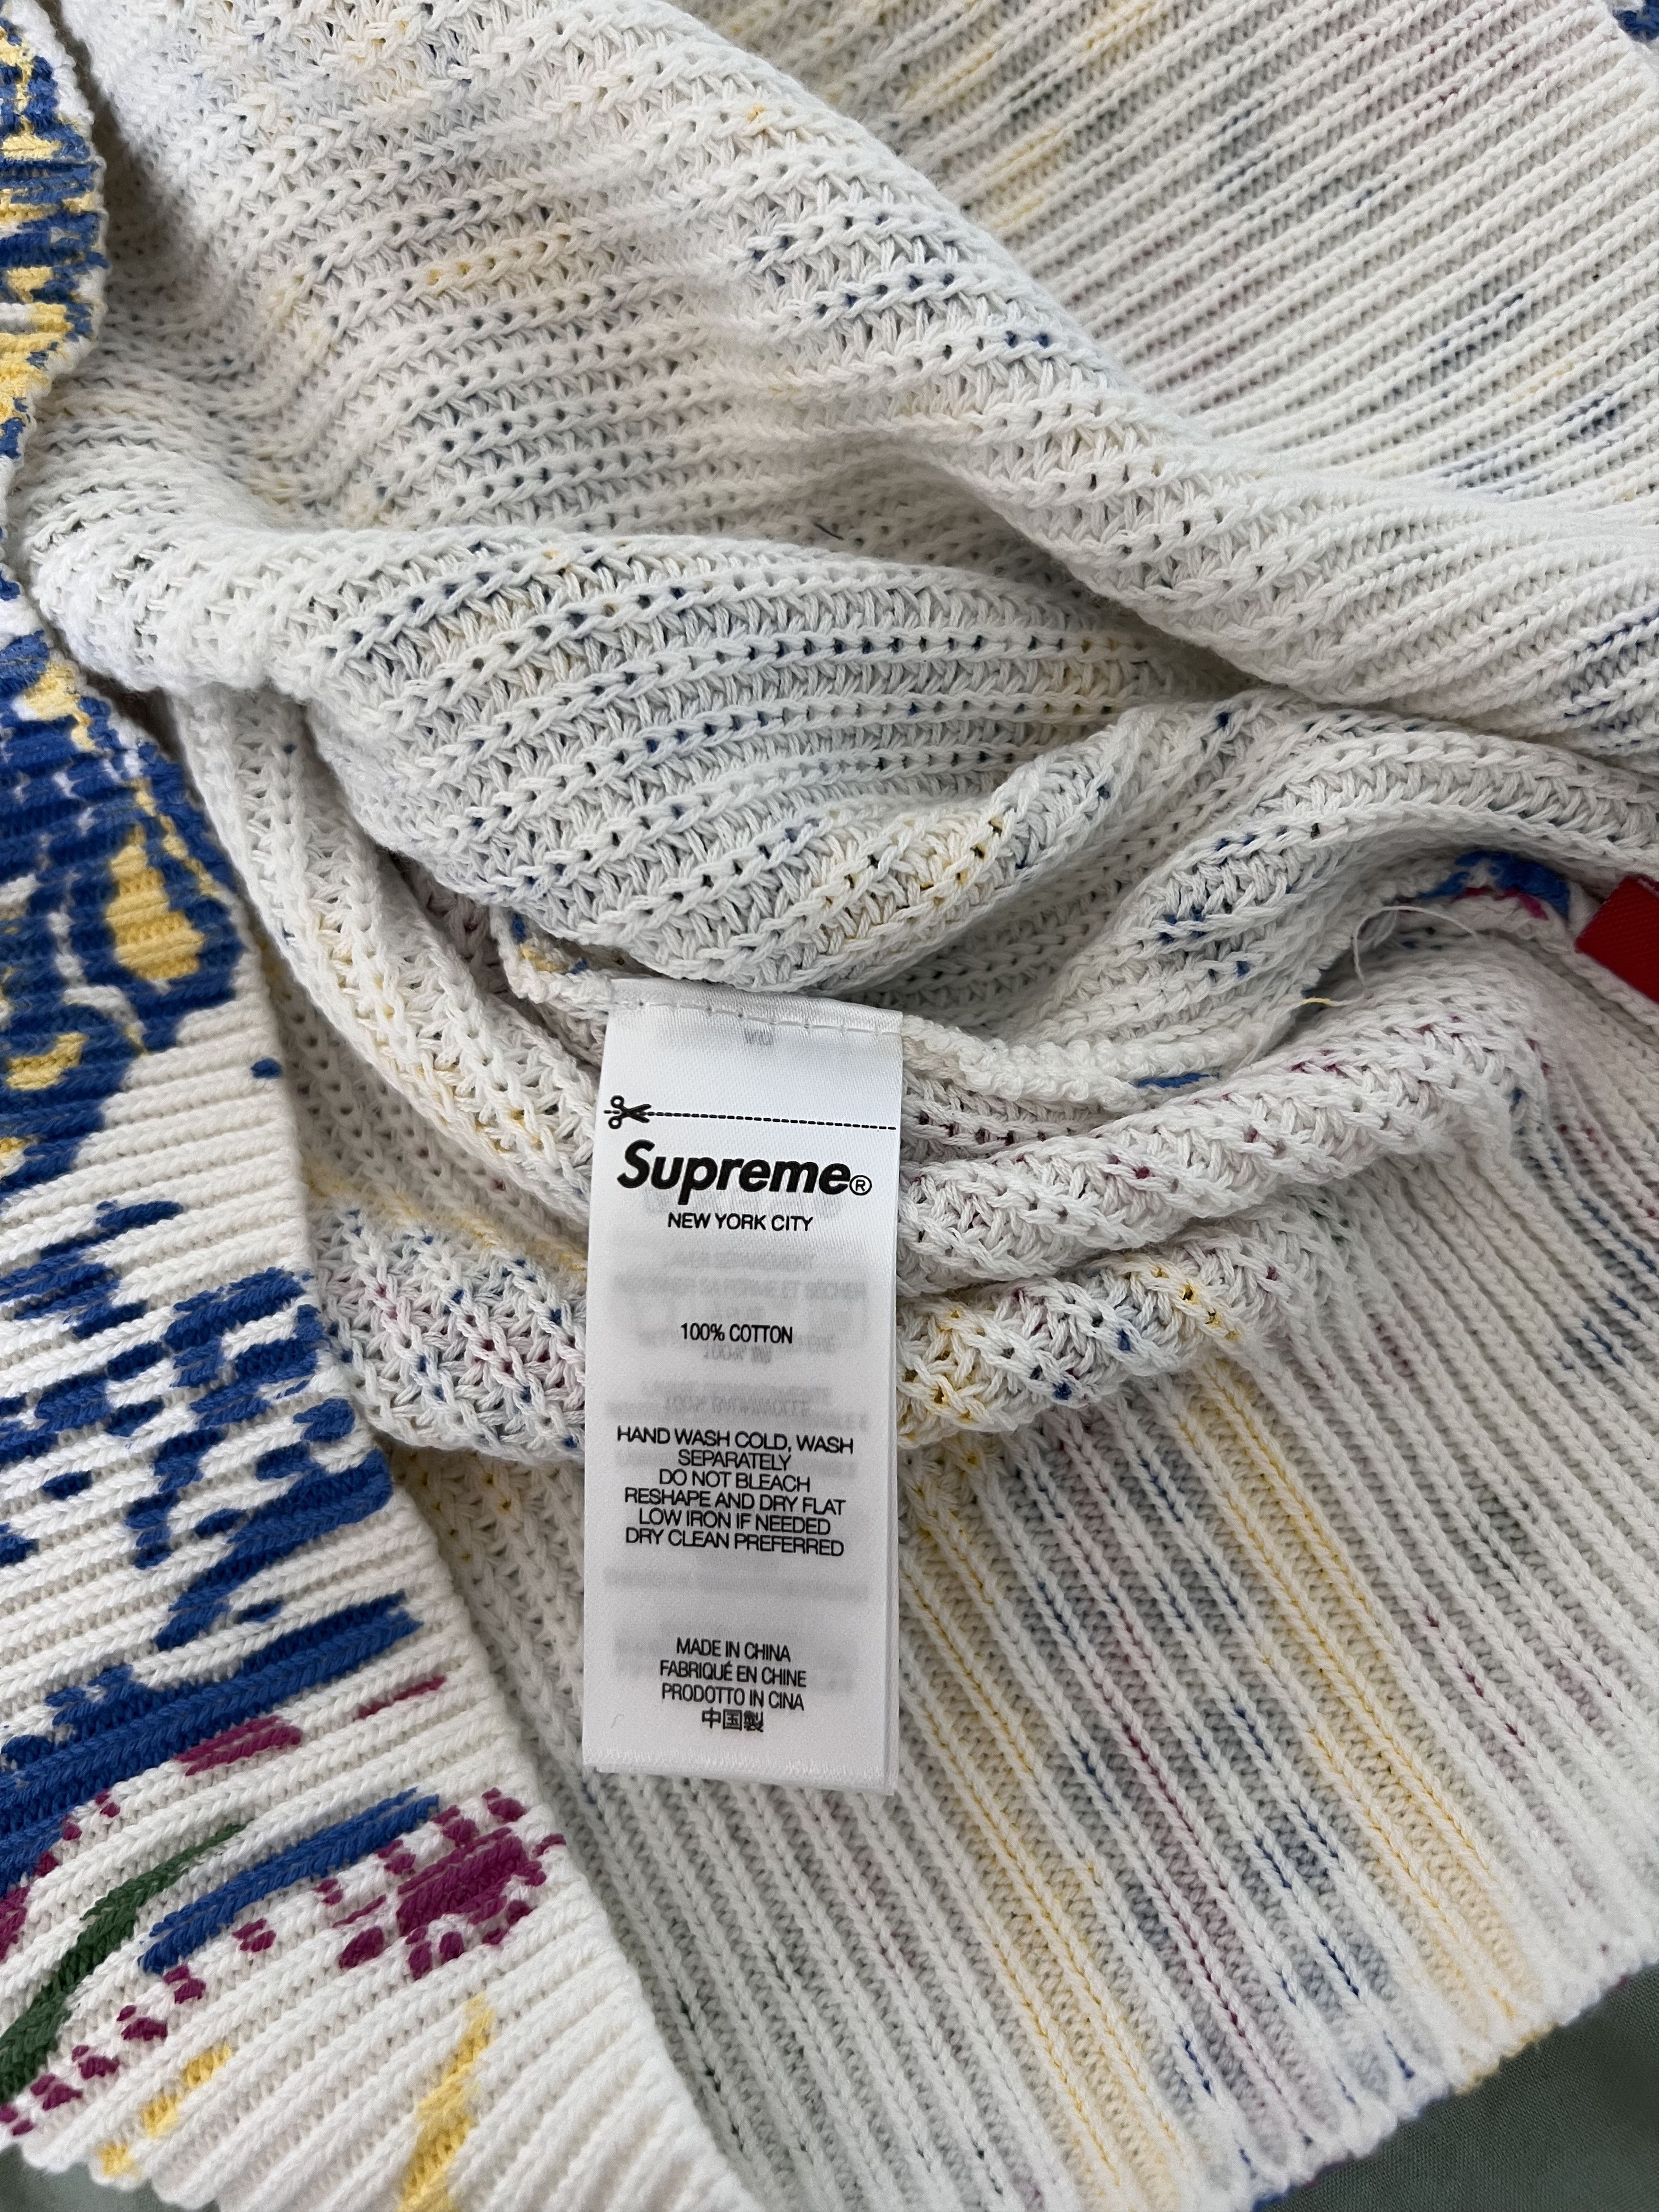 Supreme Supreme Printed Paisley Sweater in White | Grailed